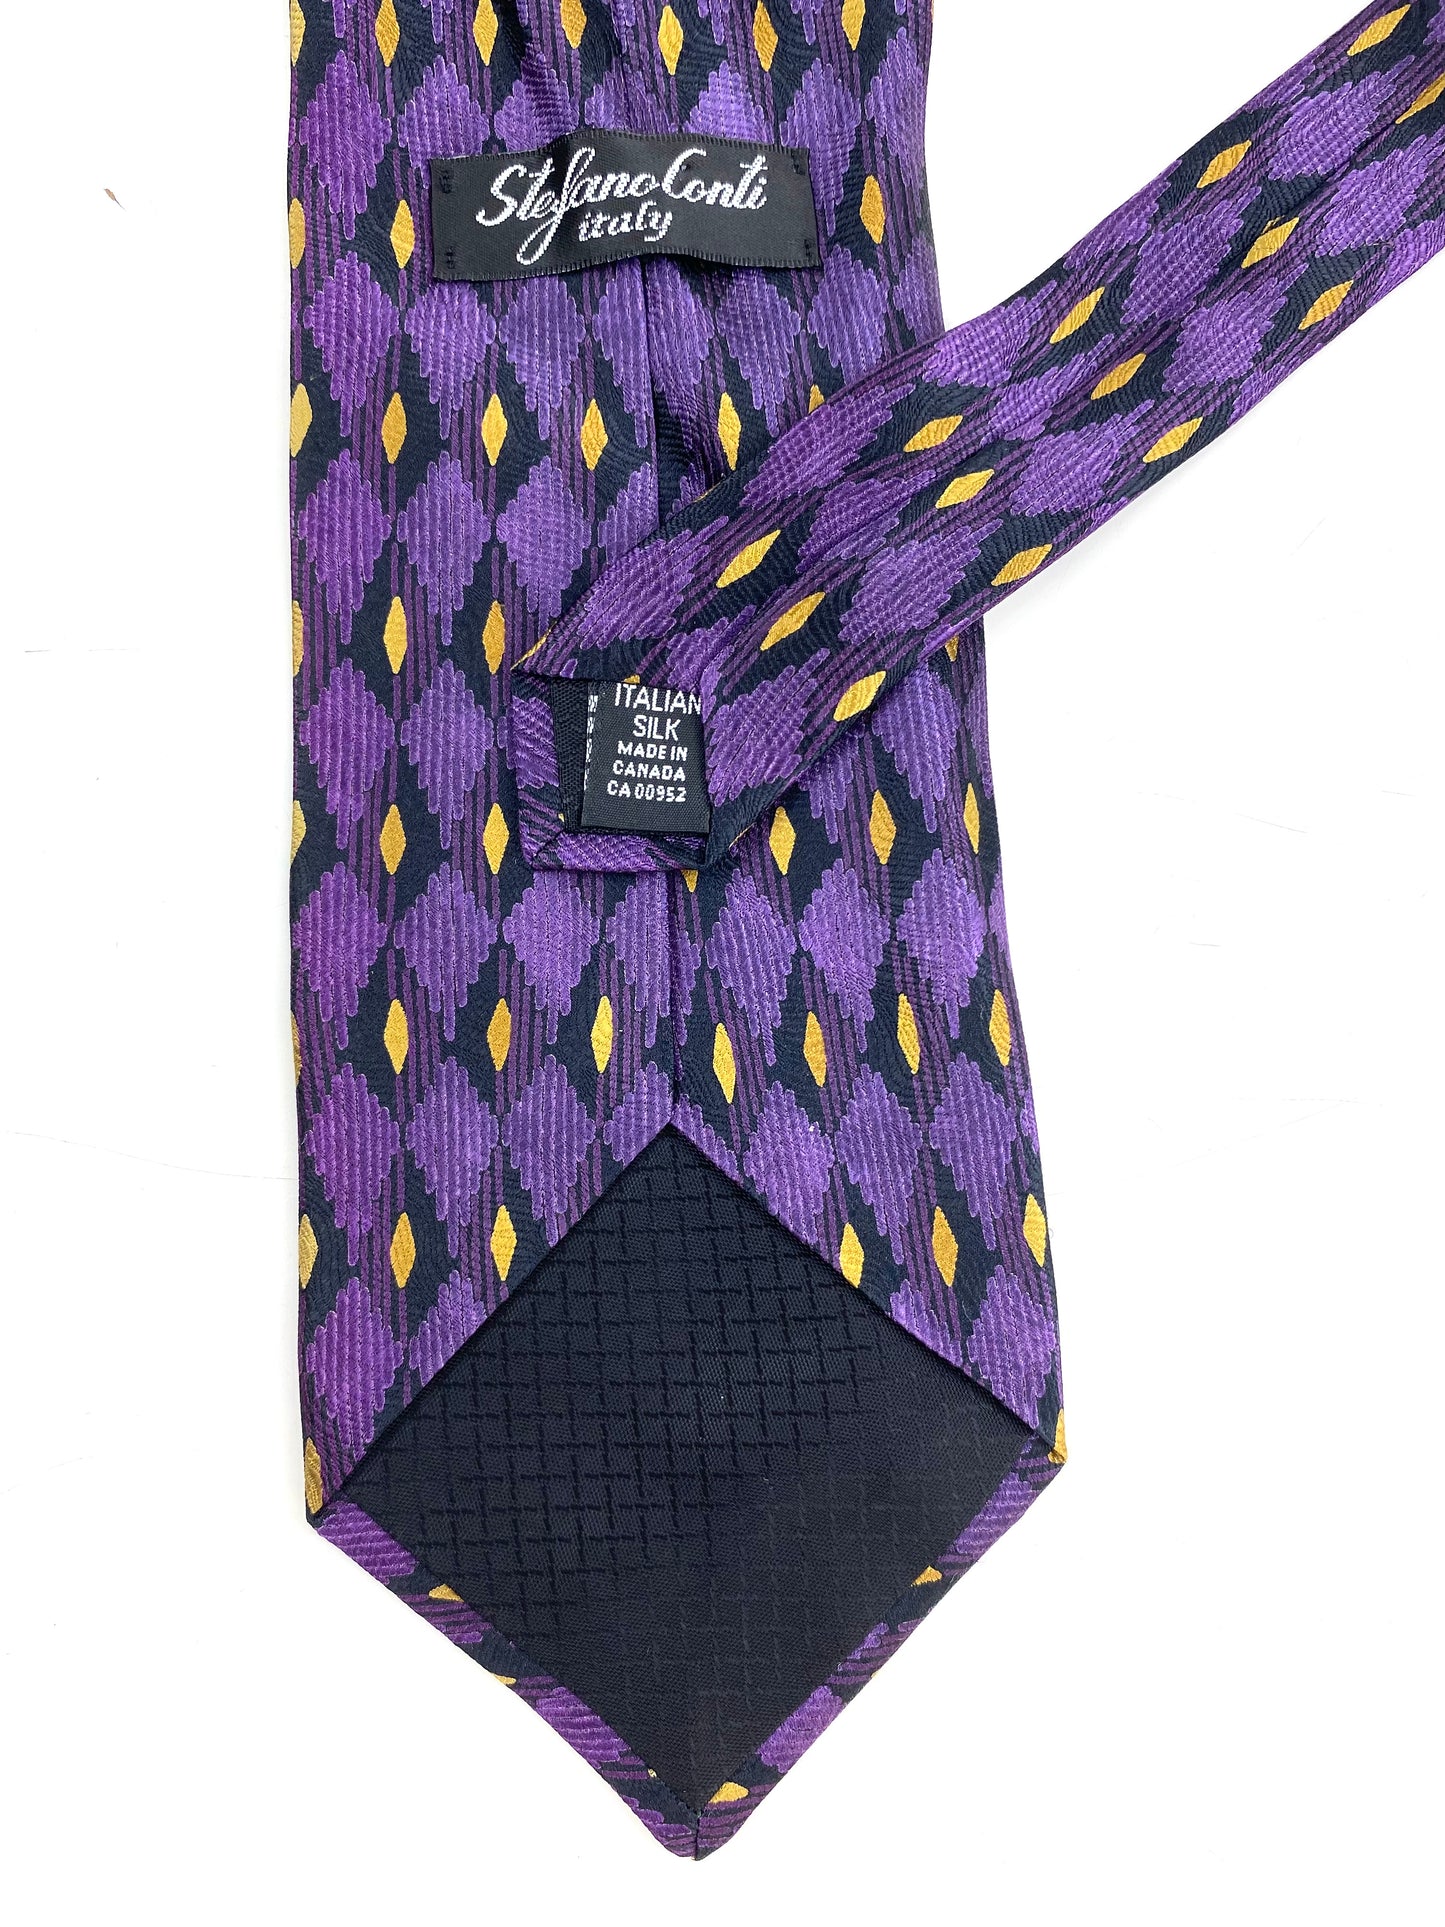 90s Deadstock Silk Necktie, Men's Vintage Purple/ Yellow Diamond Pattern Tie, NOS